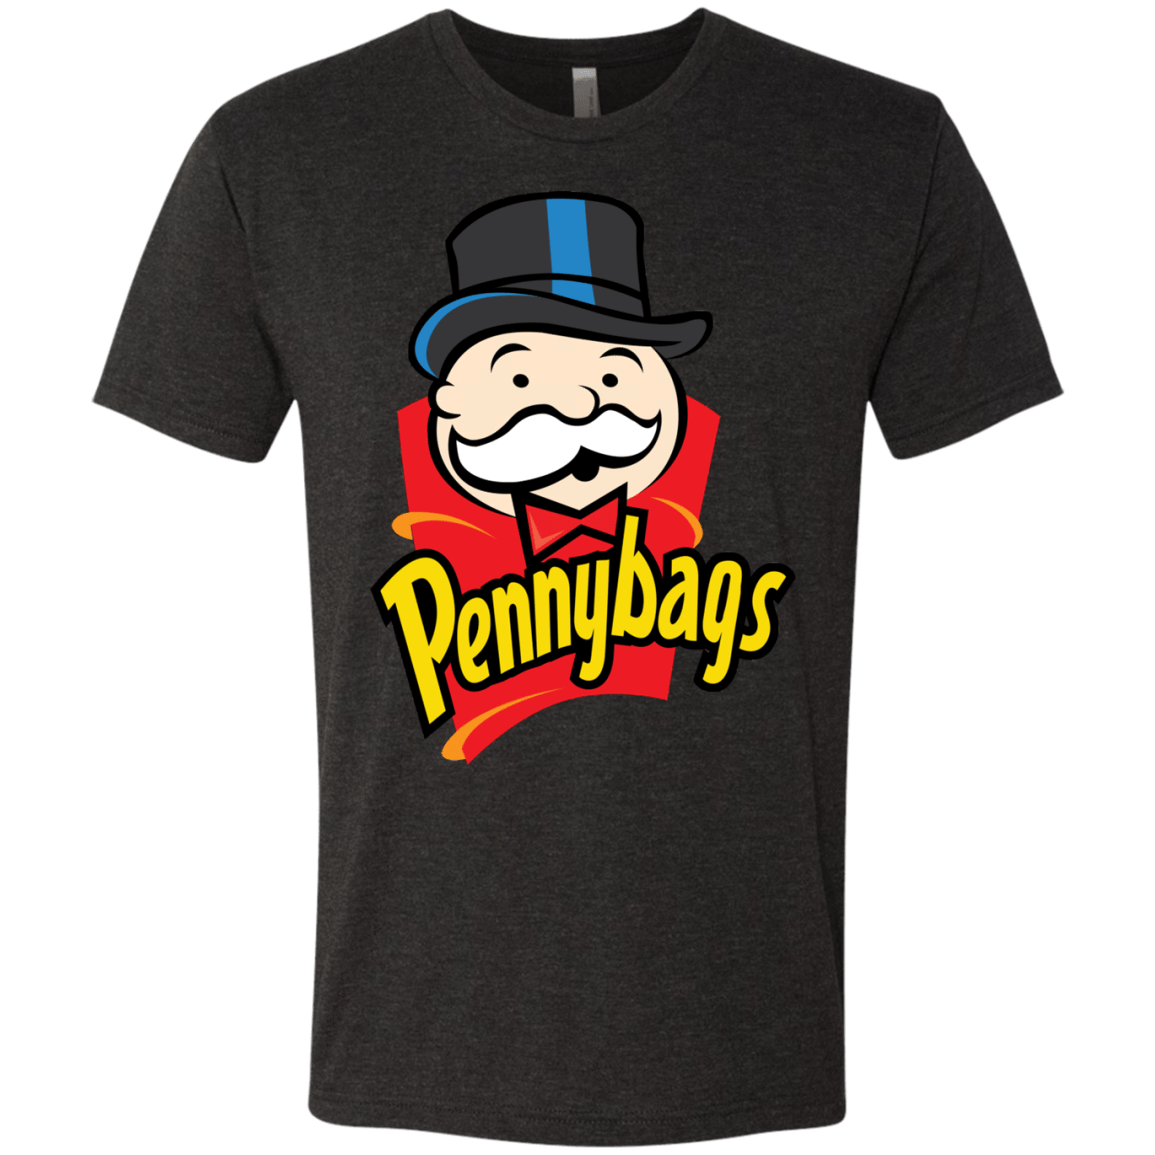 T-Shirts Vintage Black / S Pennybags Men's Triblend T-Shirt